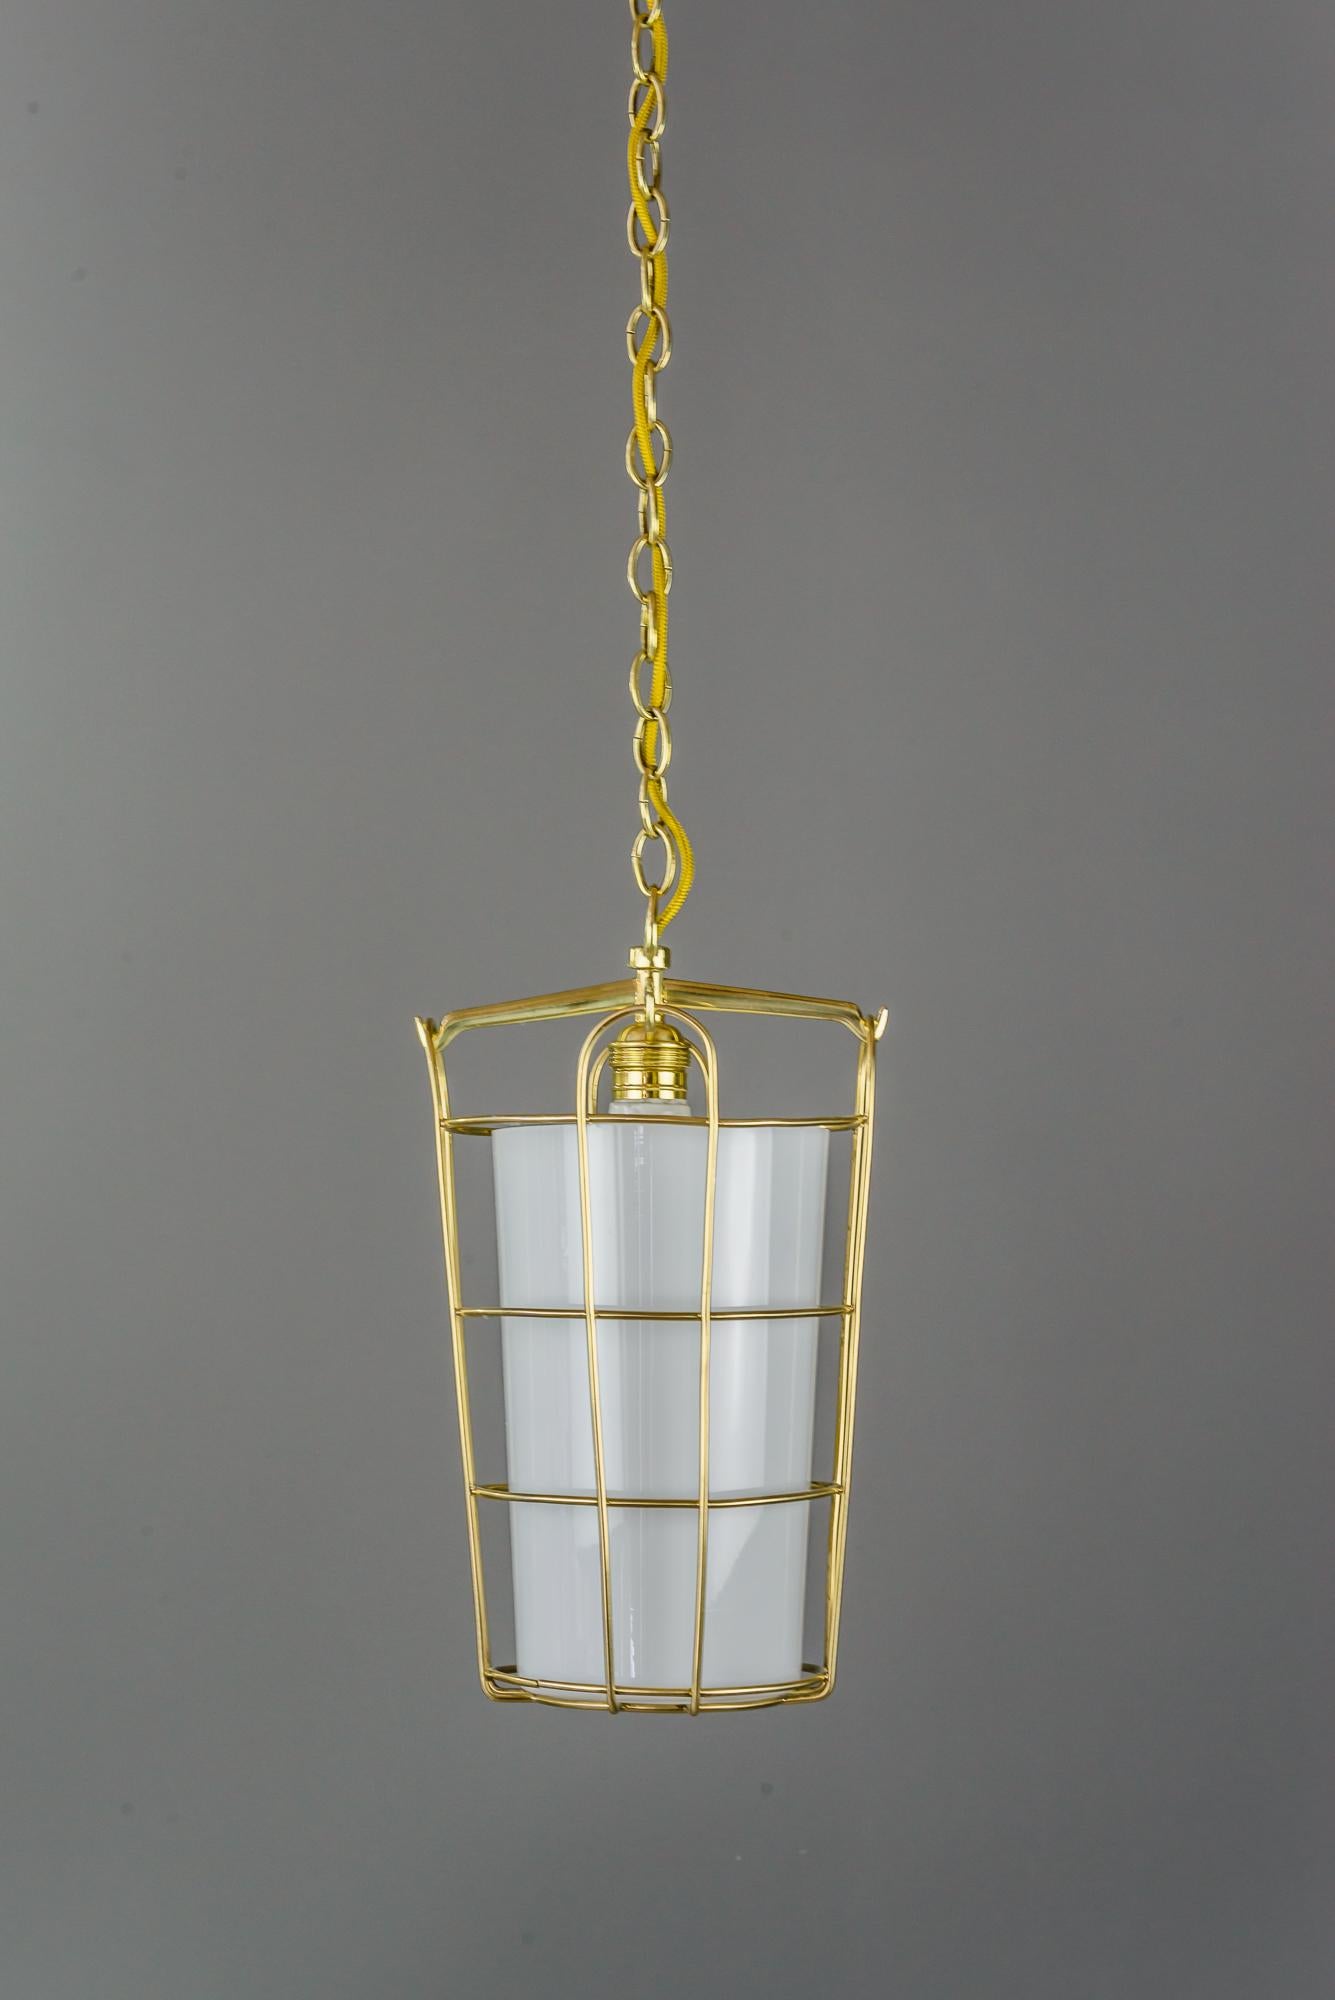 Pendant by J.T Kalmar, circa 1950s
Original glass
Polished and stove enameled.